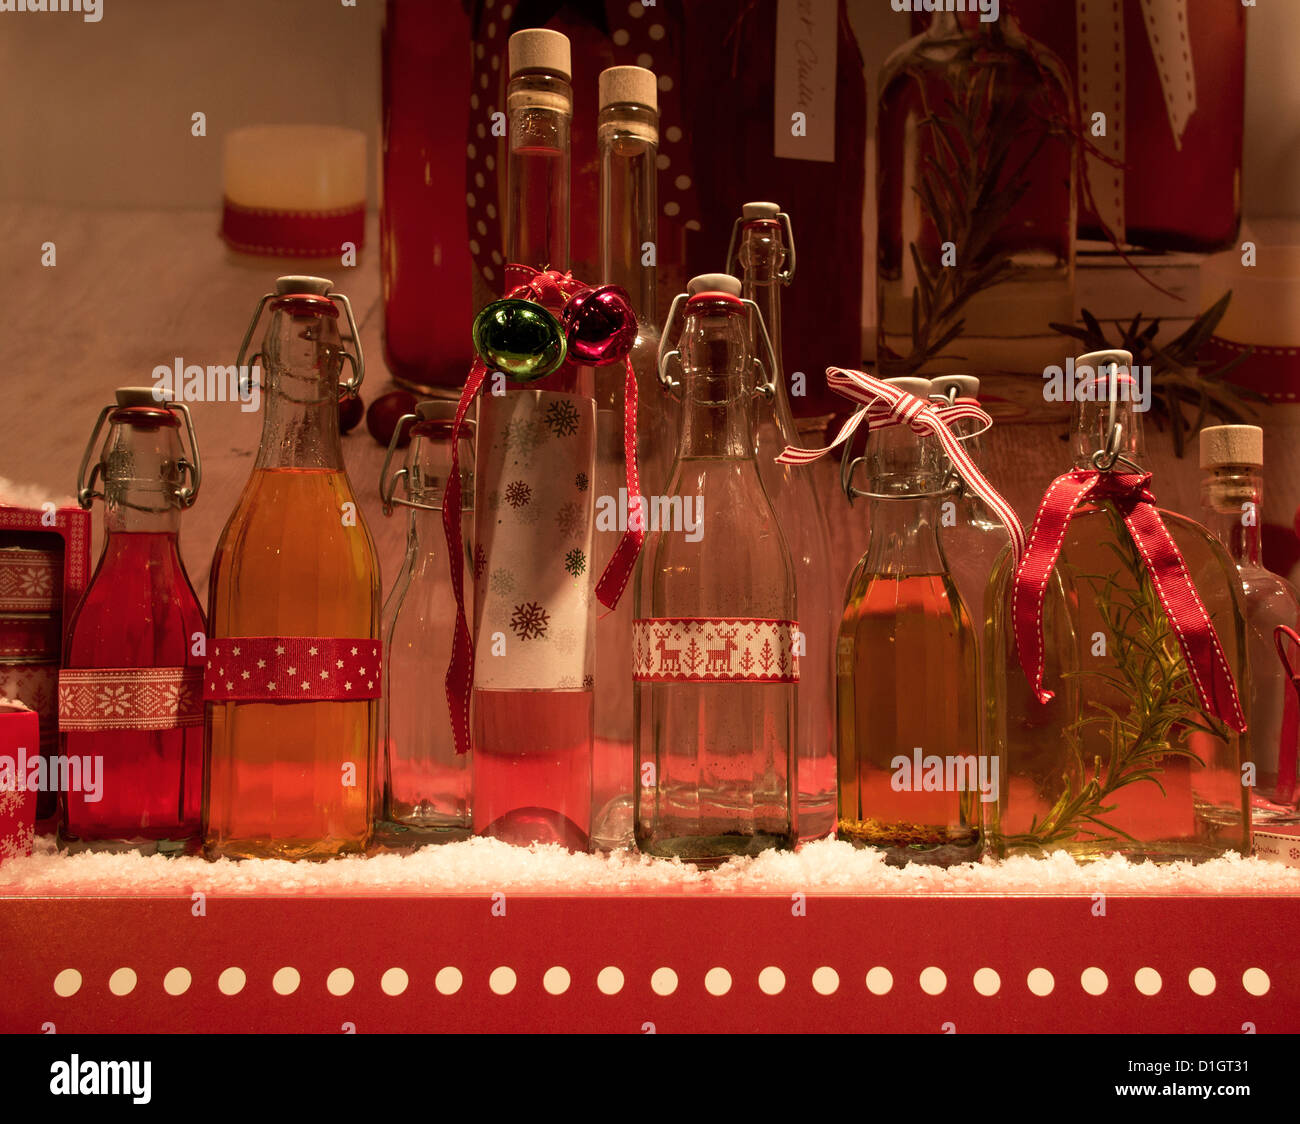 Lakeland Cooking Oils Christmas Window Display Stock Photo